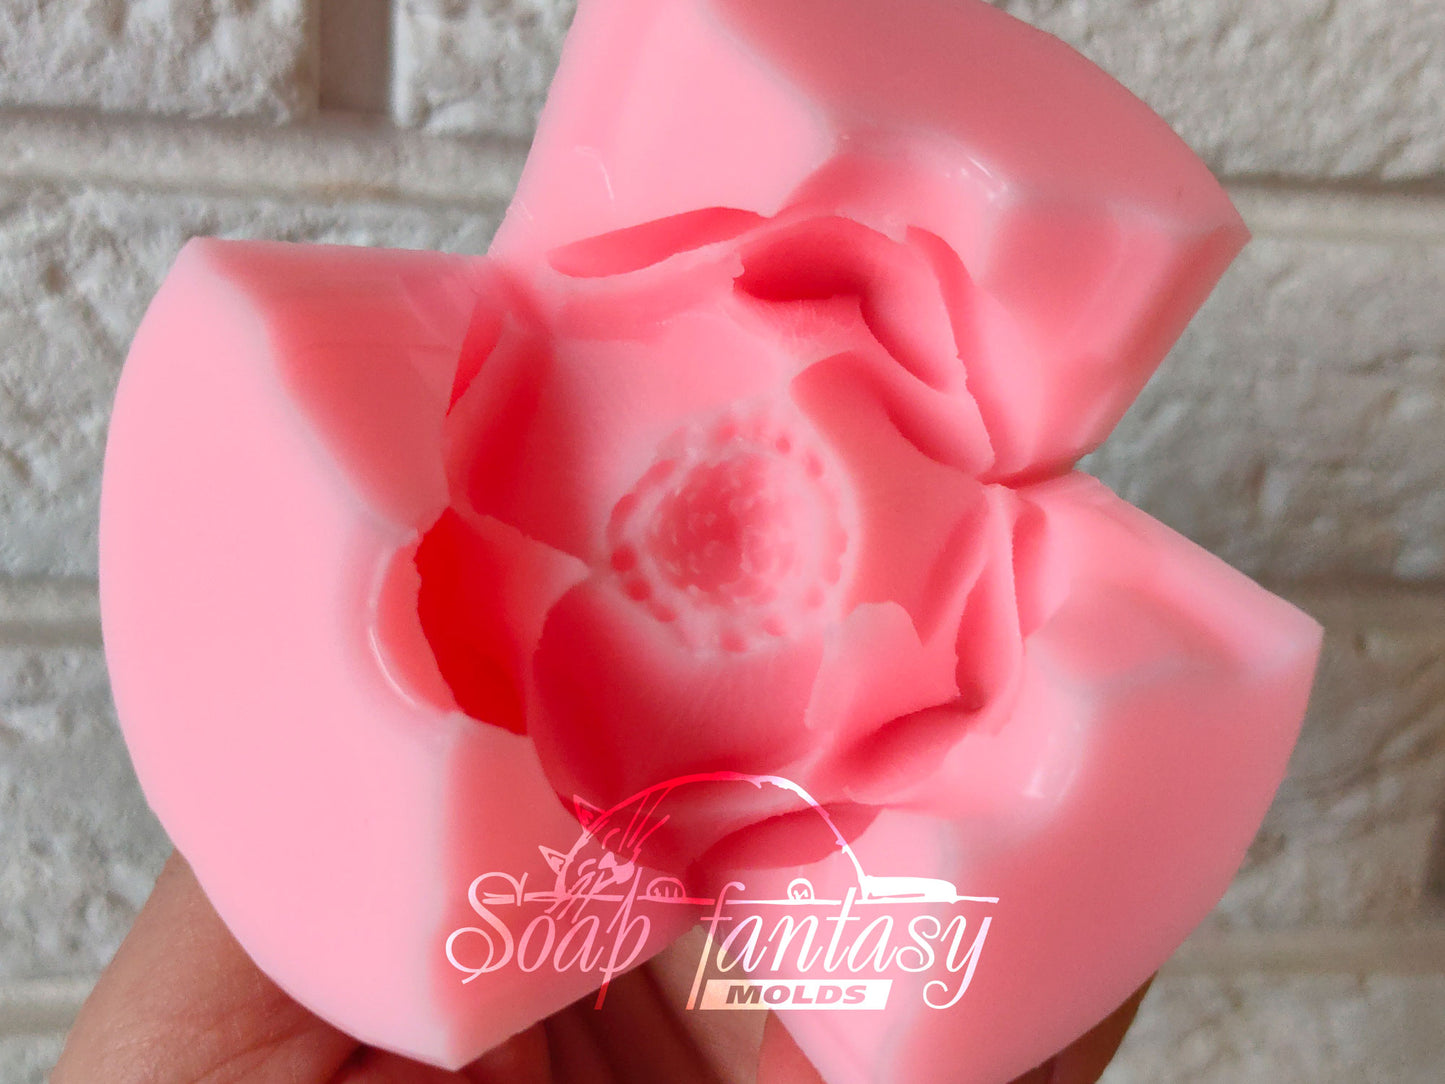 Magnolia (mini) flower silicone mold for soap making